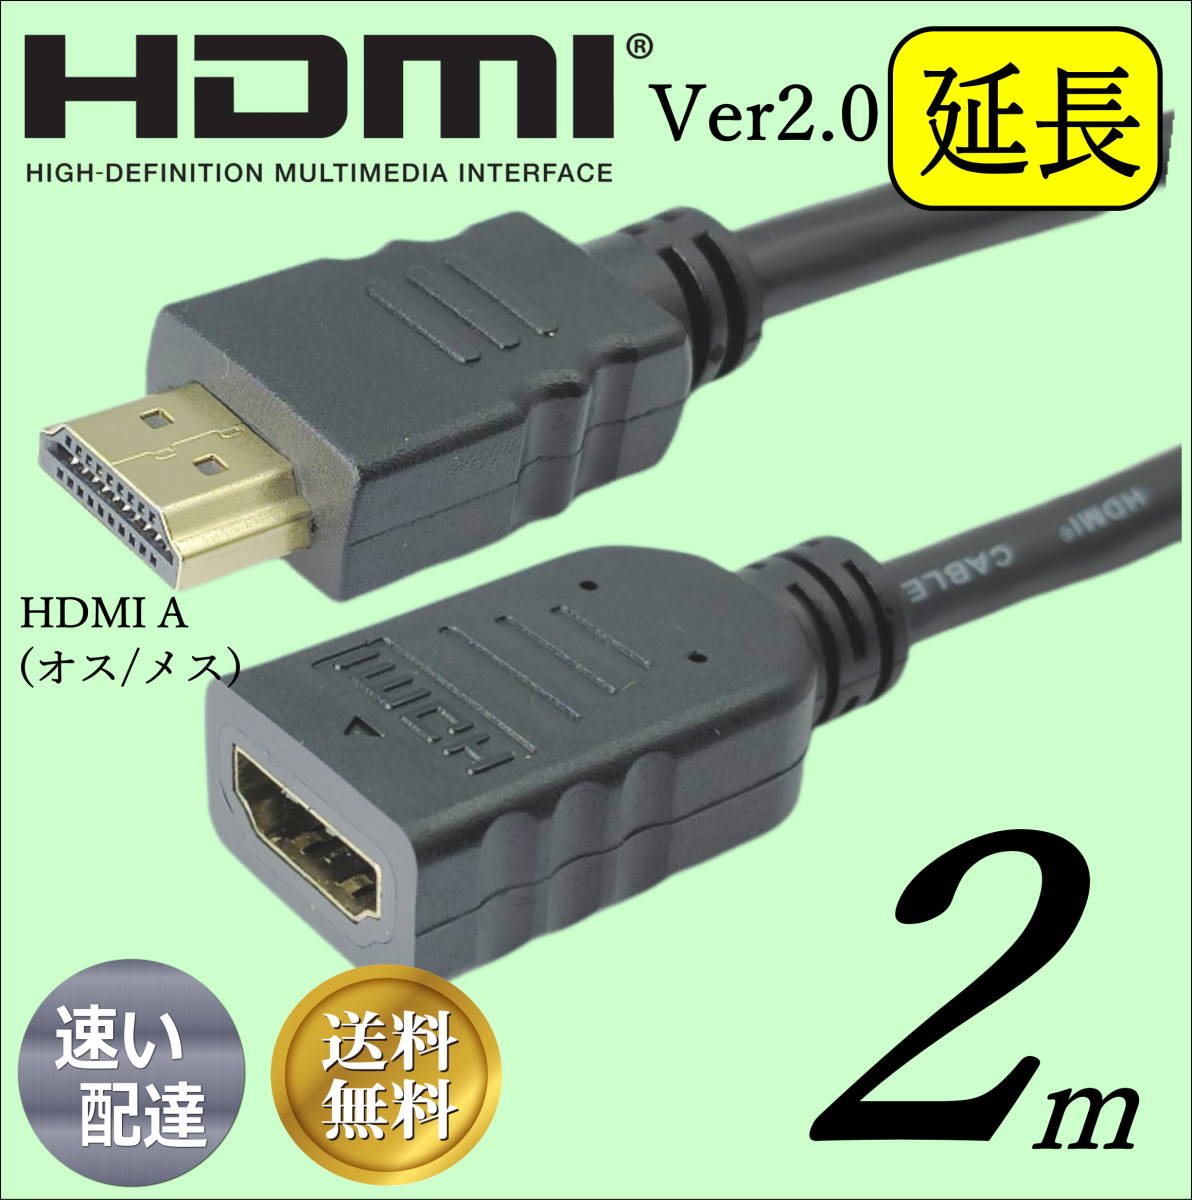 ☆2m HDMI延長ケーブル 高速転送 Ver2.0 HDMI A(オス/メス) 3D映像 4K ネットワーク対応 2HDMI-20E【送料無料】★☆_画像1